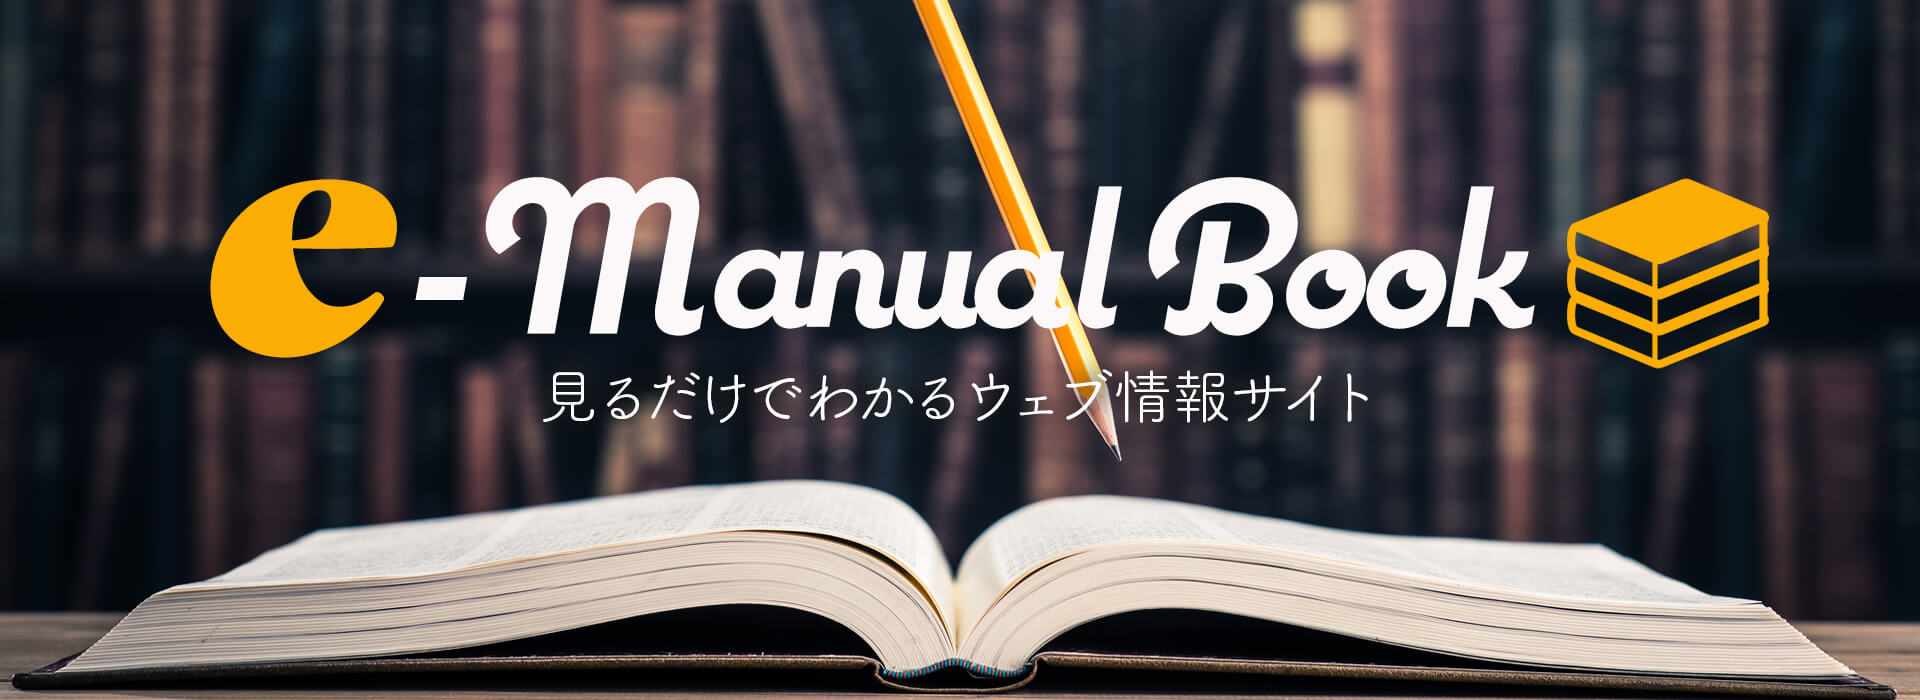 e-manual bookウェブ情報サイト